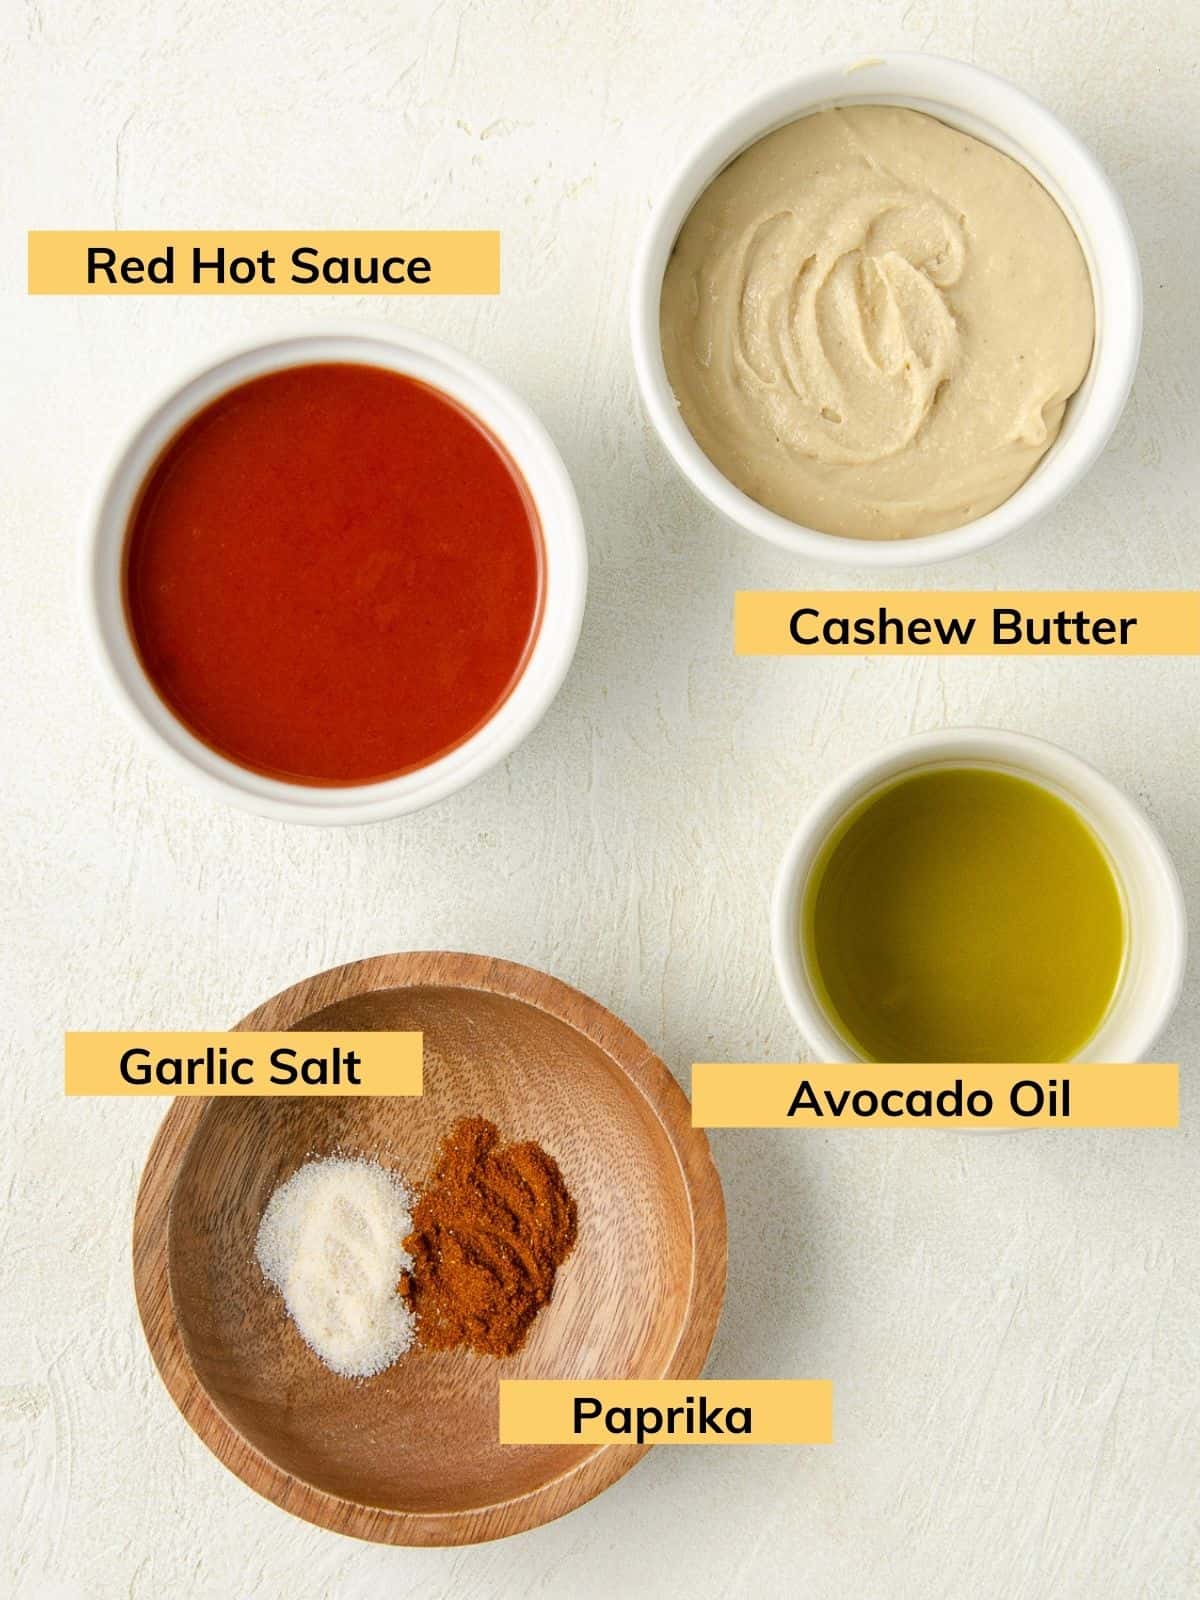 Ingredients for making vegan buffalo sauce: cashew butter, avocado oil, red hot sauce, garlic salt and paprika.